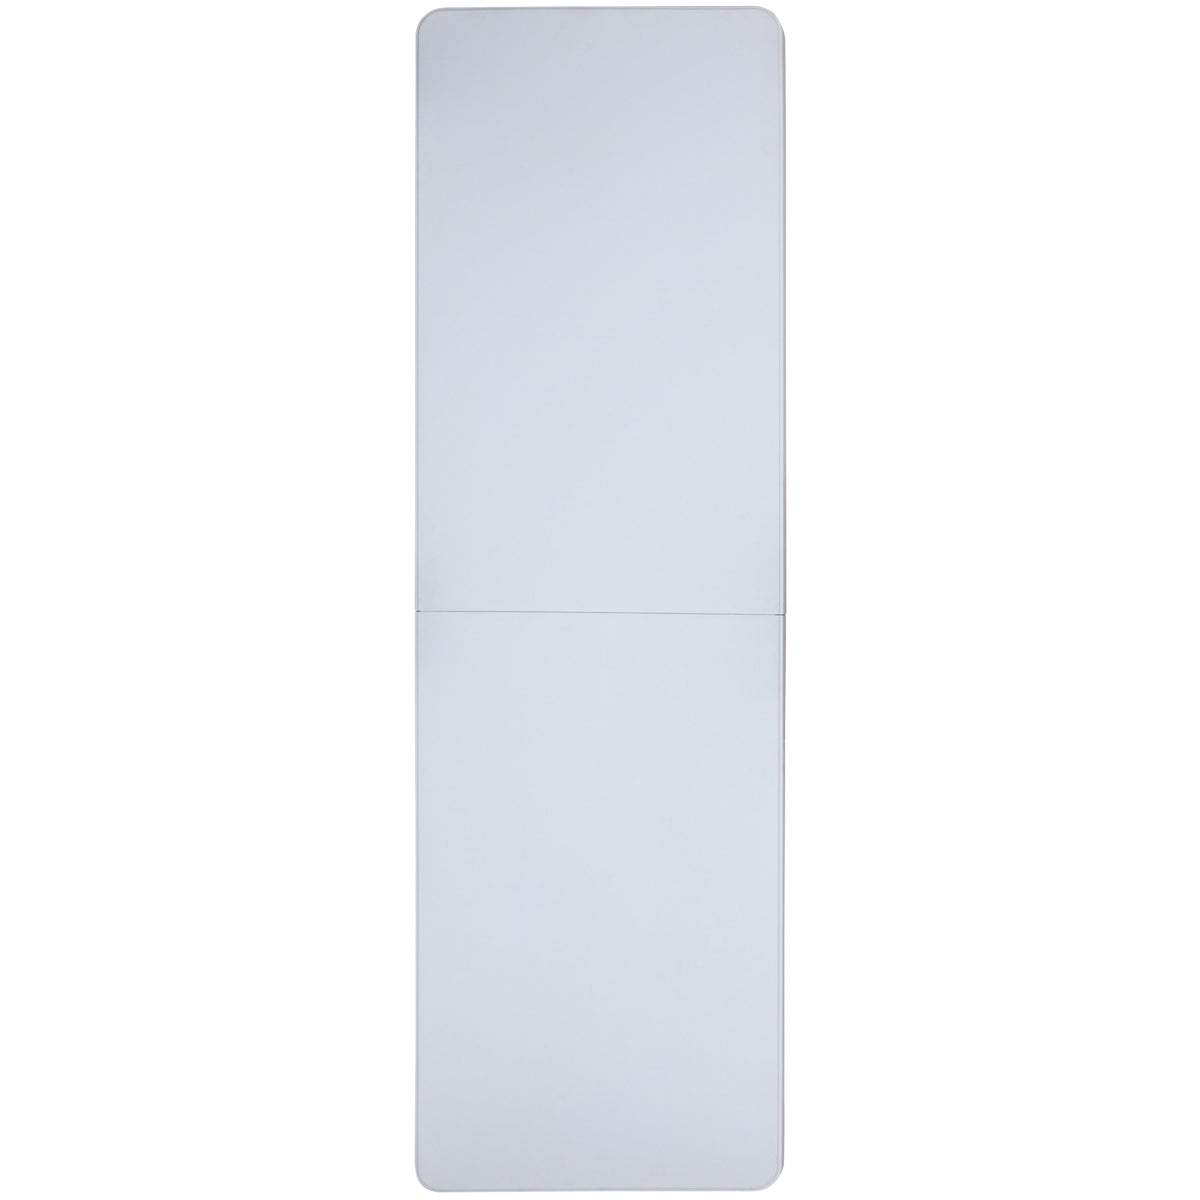 8-Foot Height Adjustable Bi-Fold Granite White Plastic Folding Table with Handle